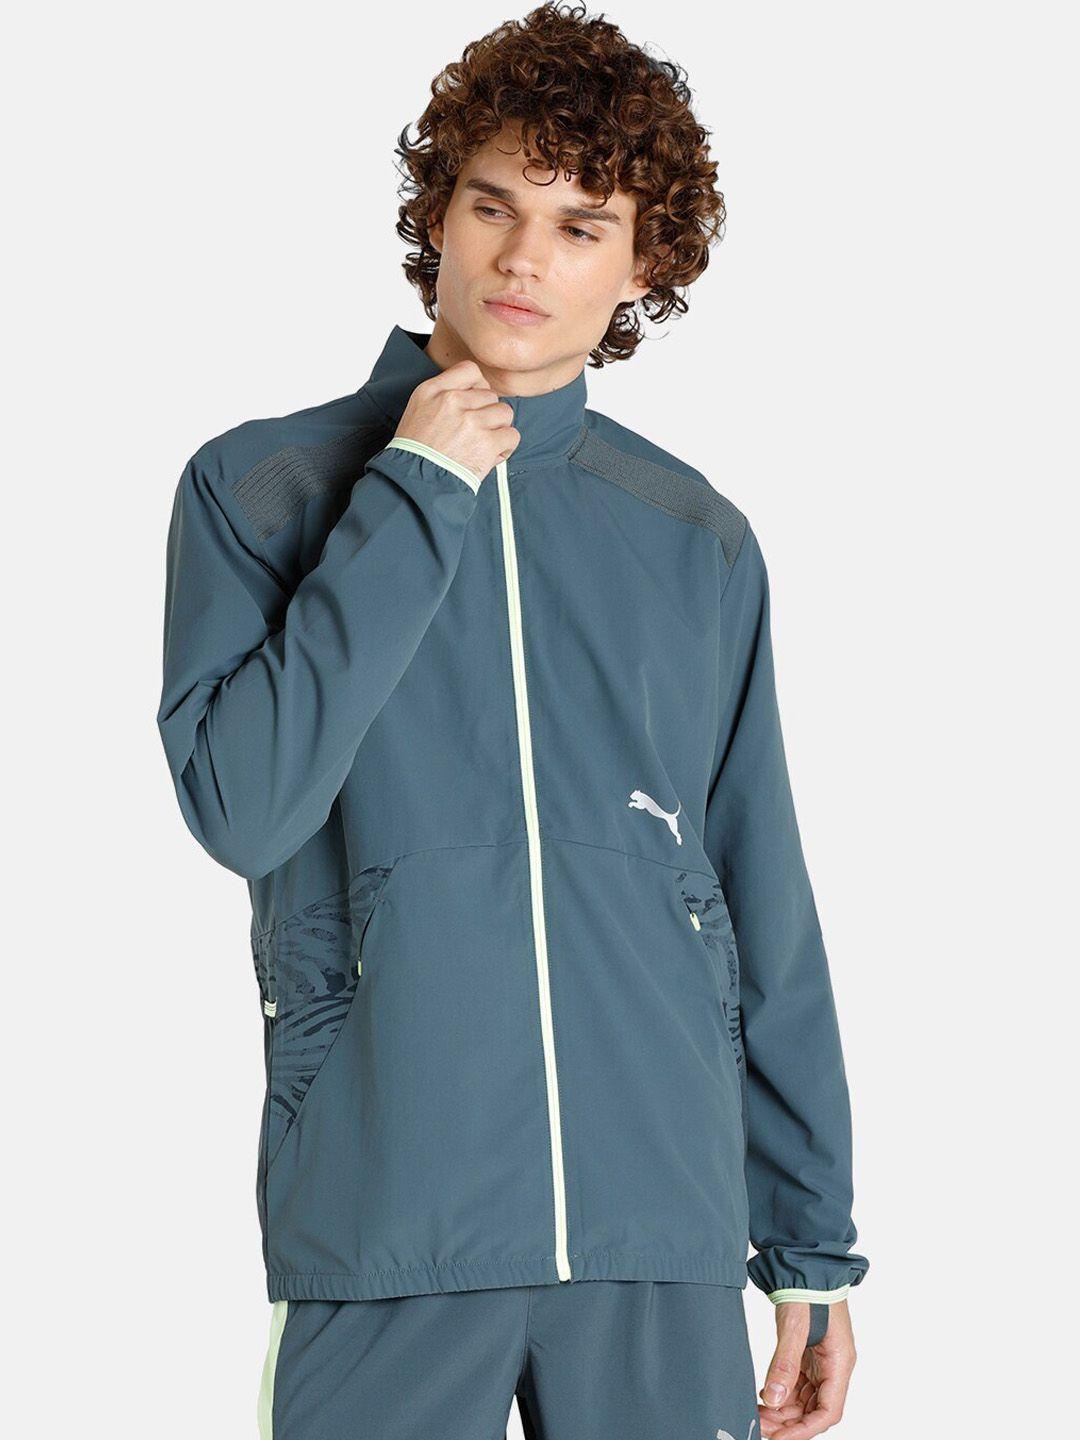 puma-men-grey-solid-stand-collar-running-track-jacket